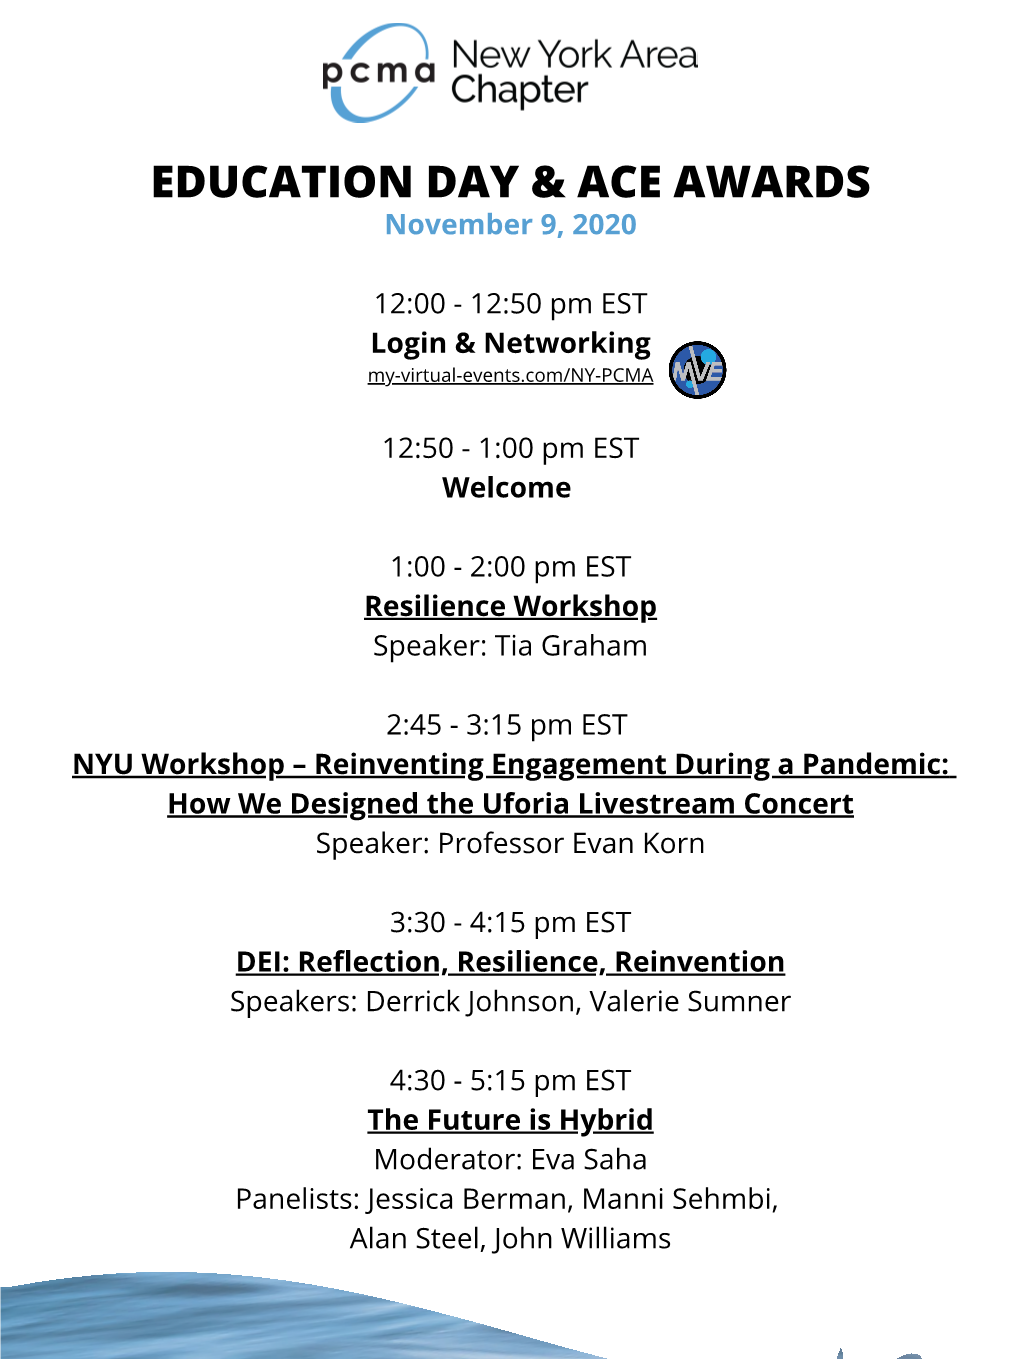 Education Day & Ace Awards